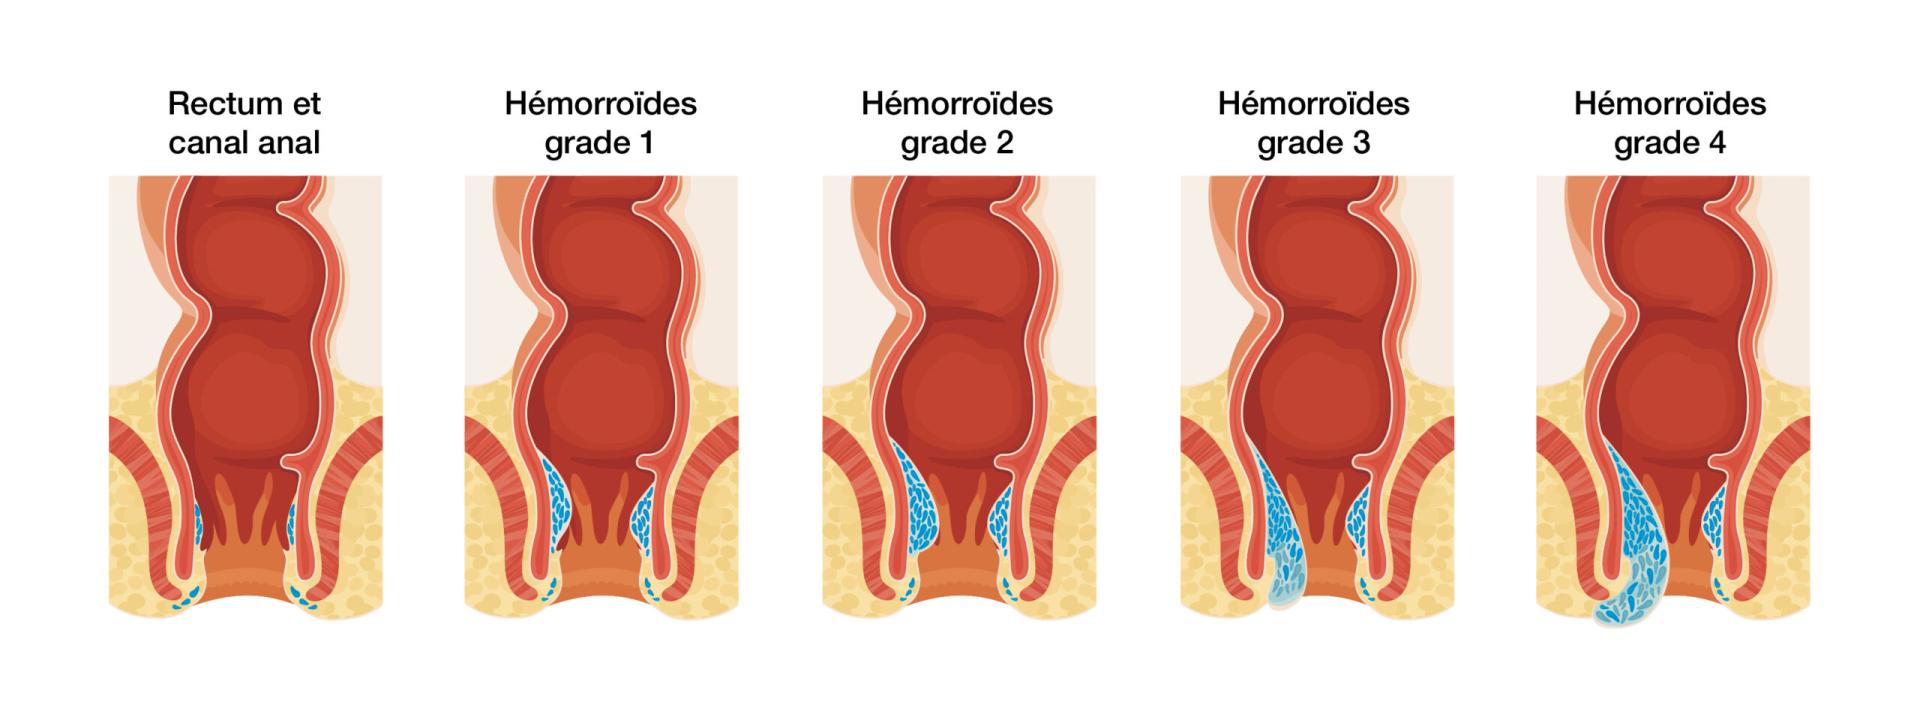 Hemorroides